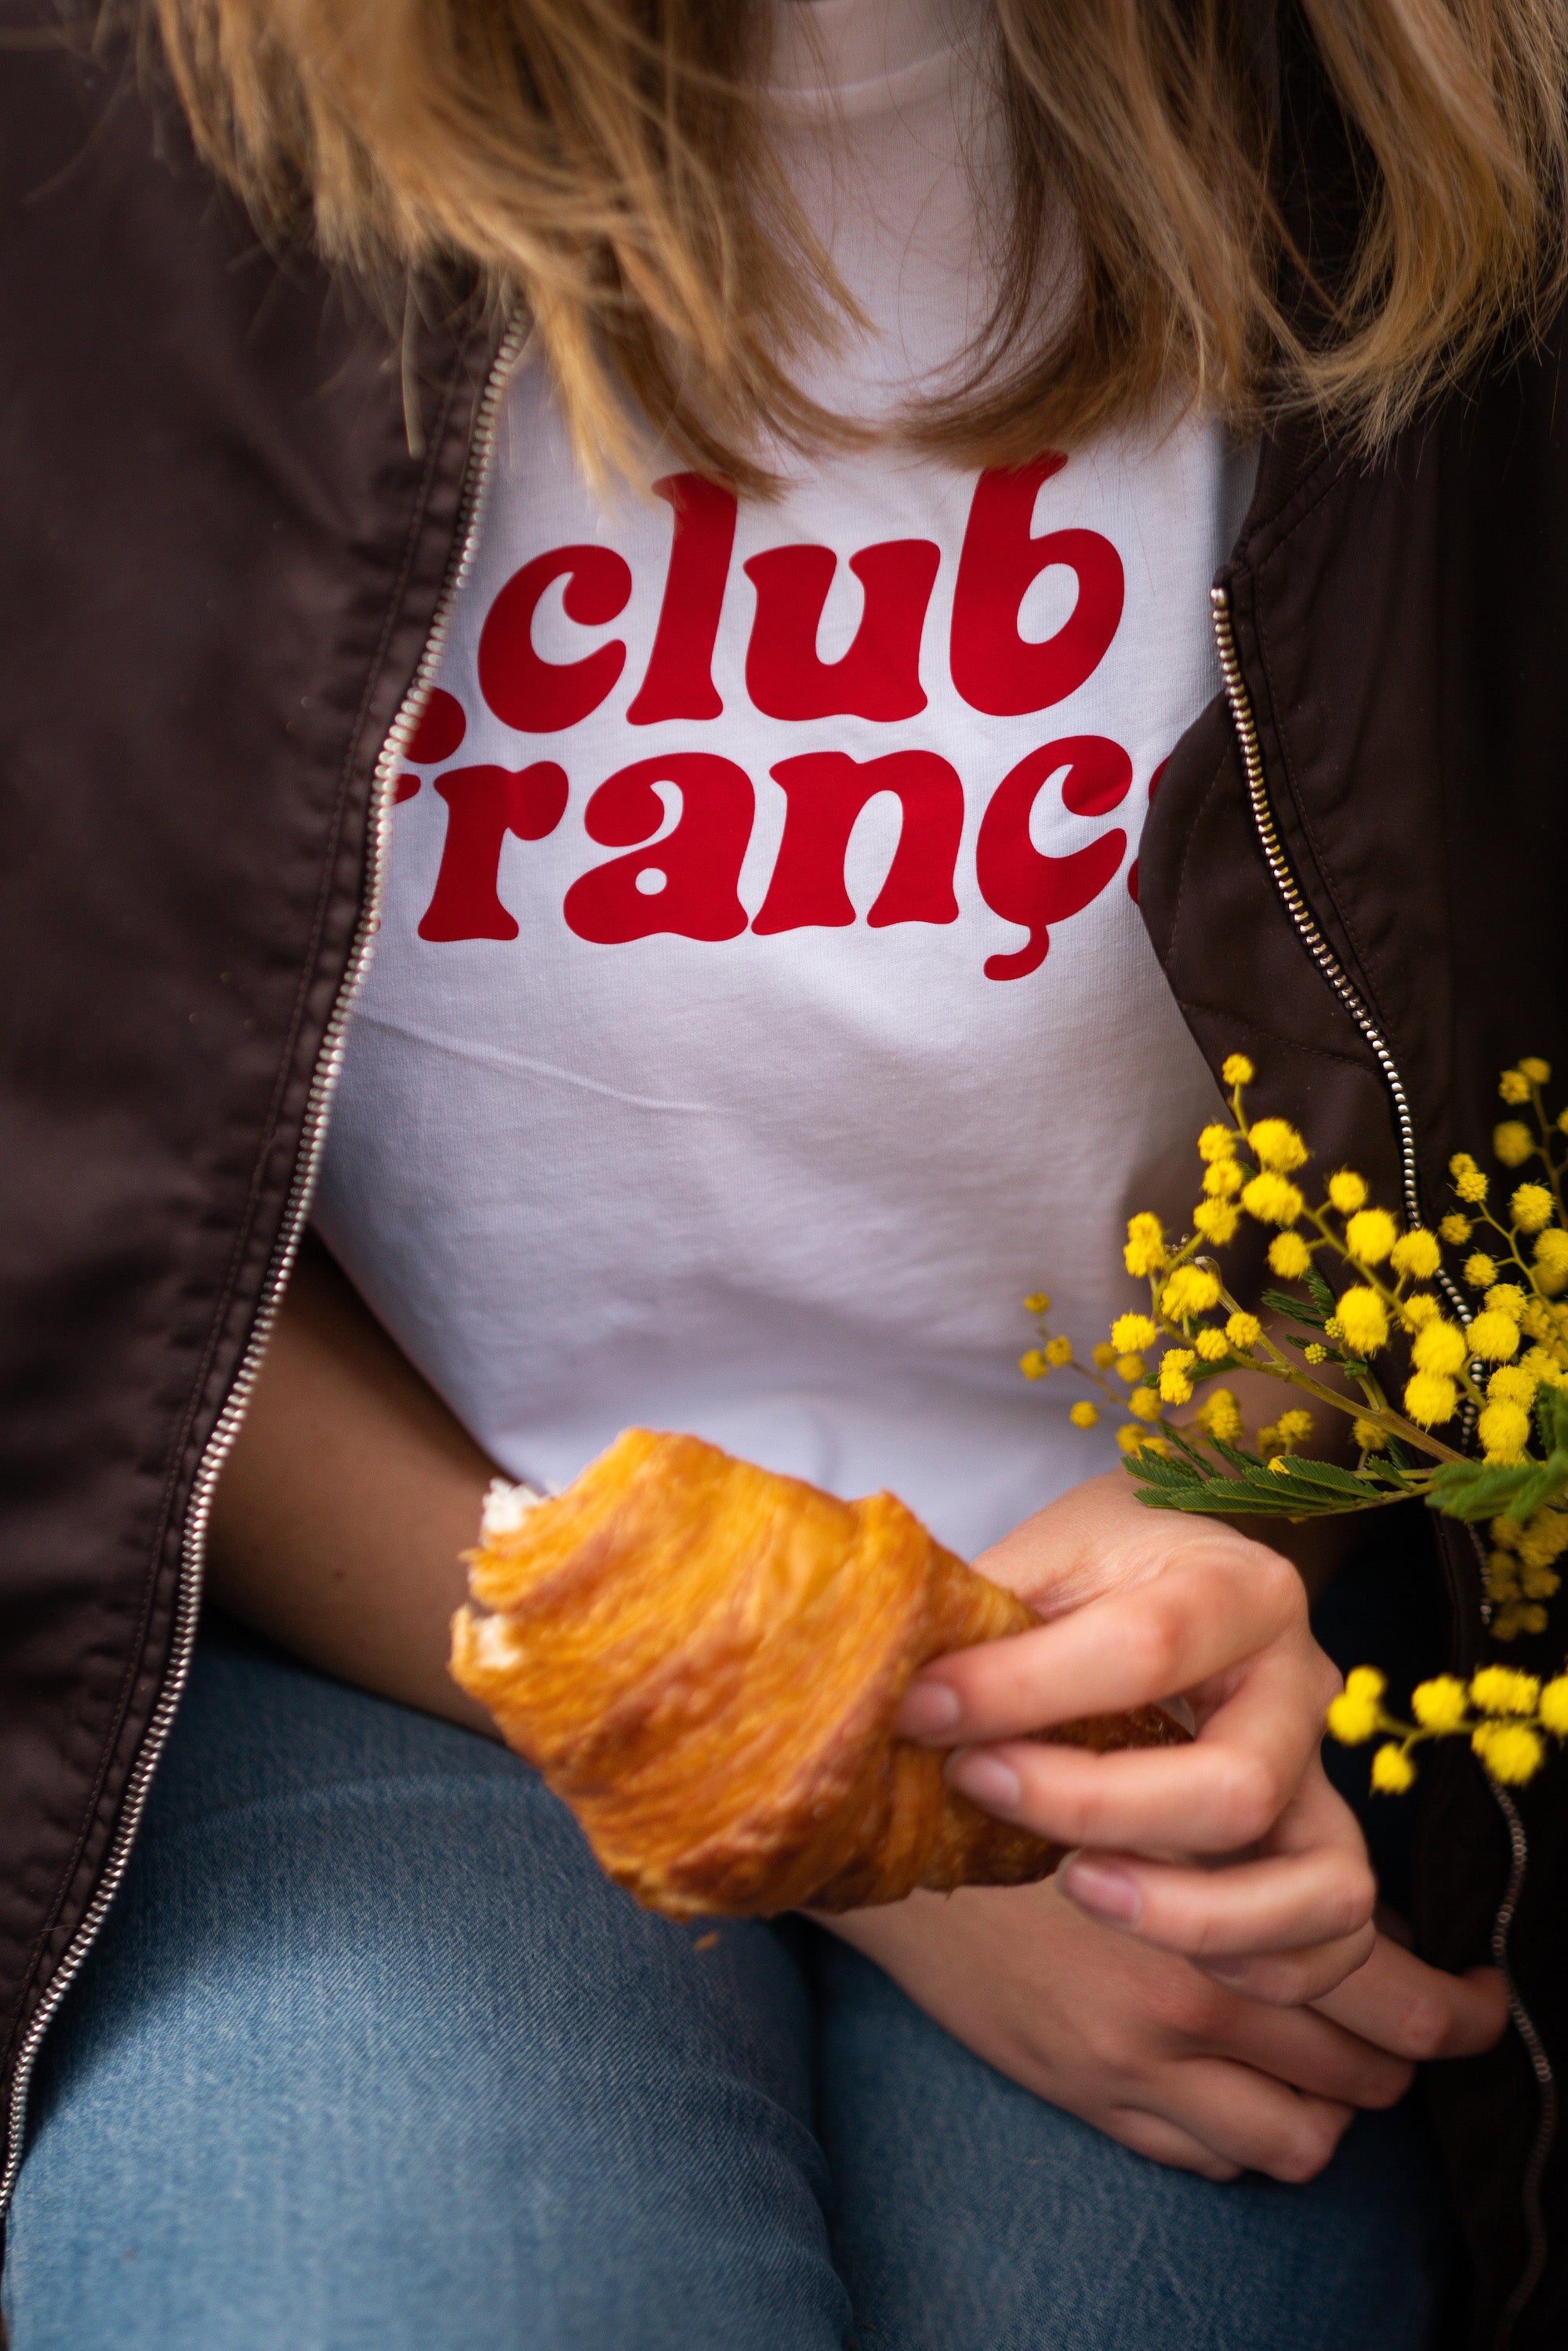 Club Francais T-Shirt - weiß / lipstick red